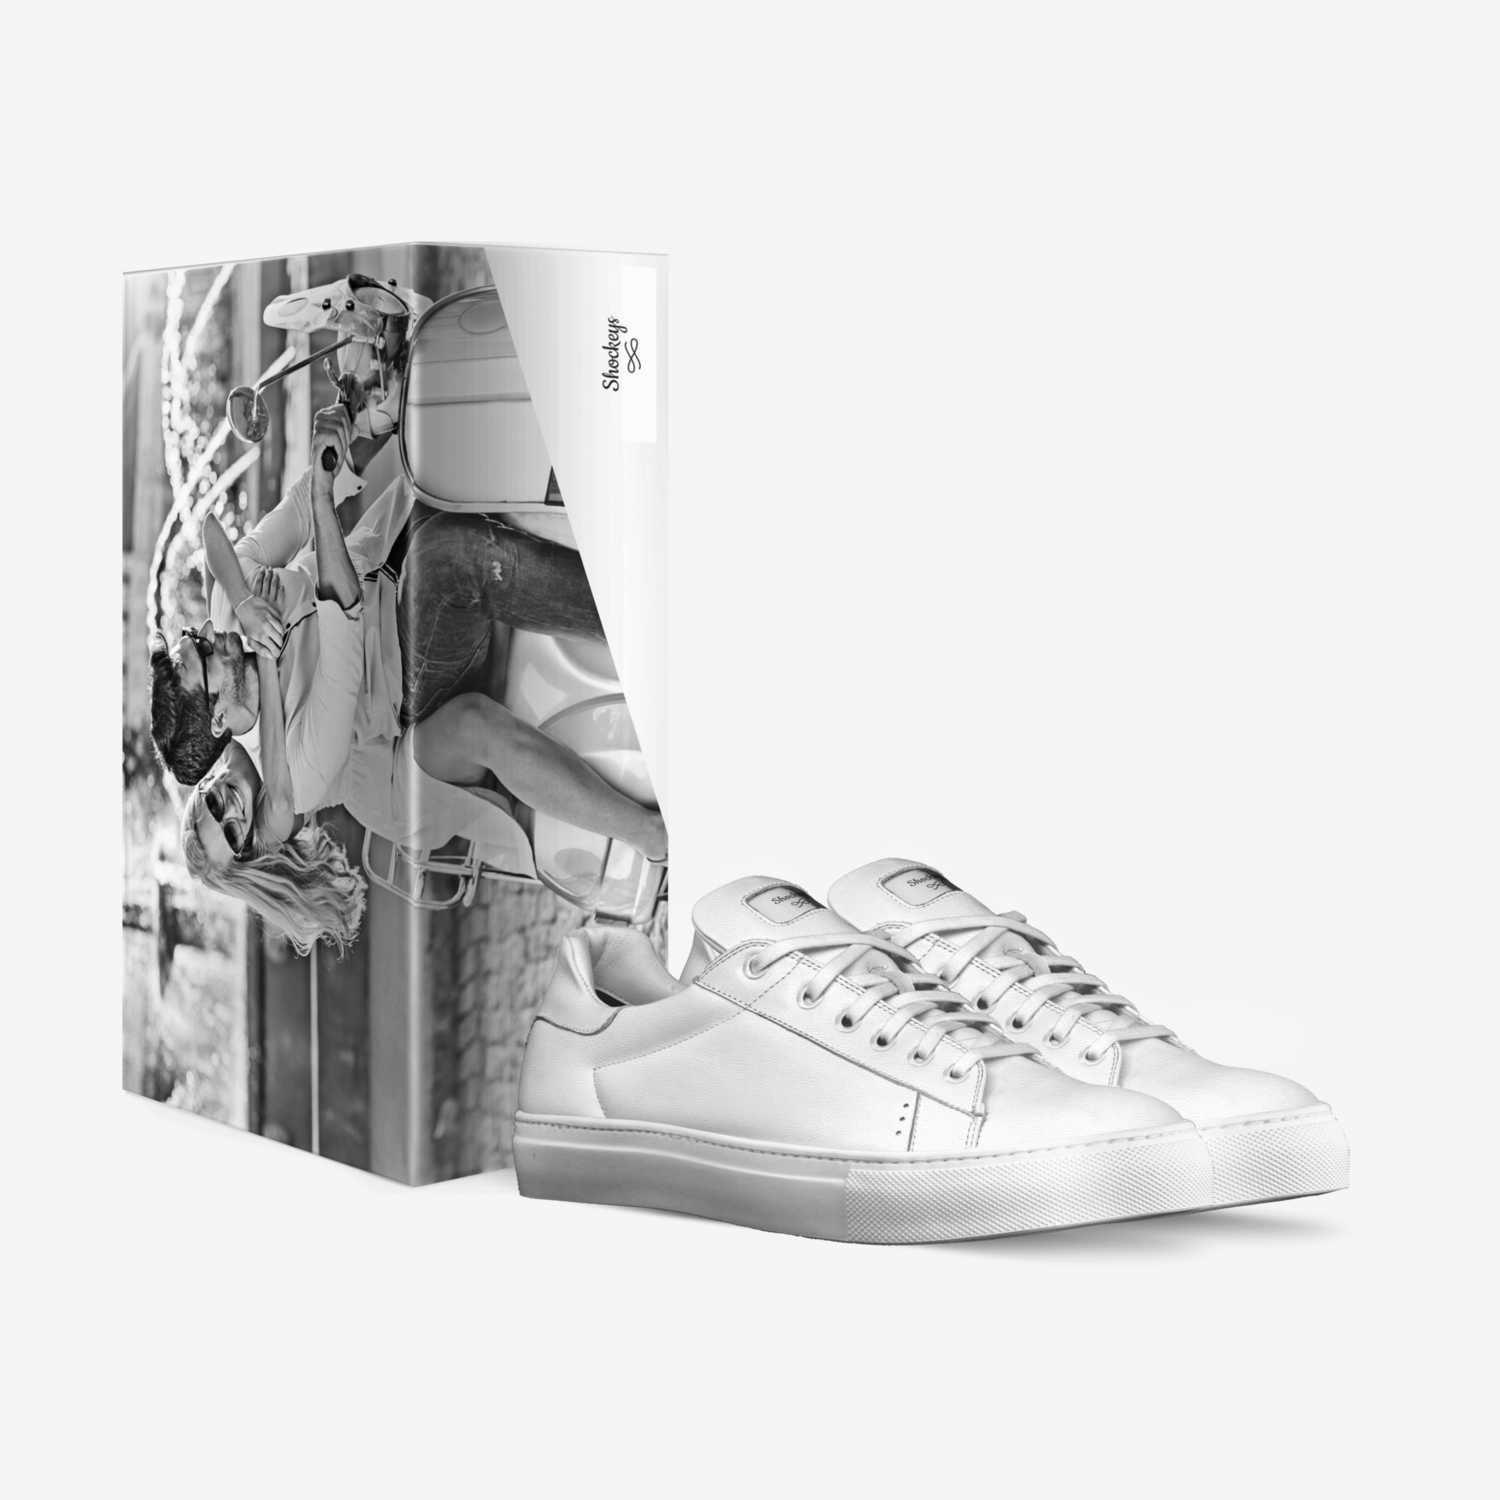 Shockeys custom made in Italy shoes by Jonathan Robinson | Box view